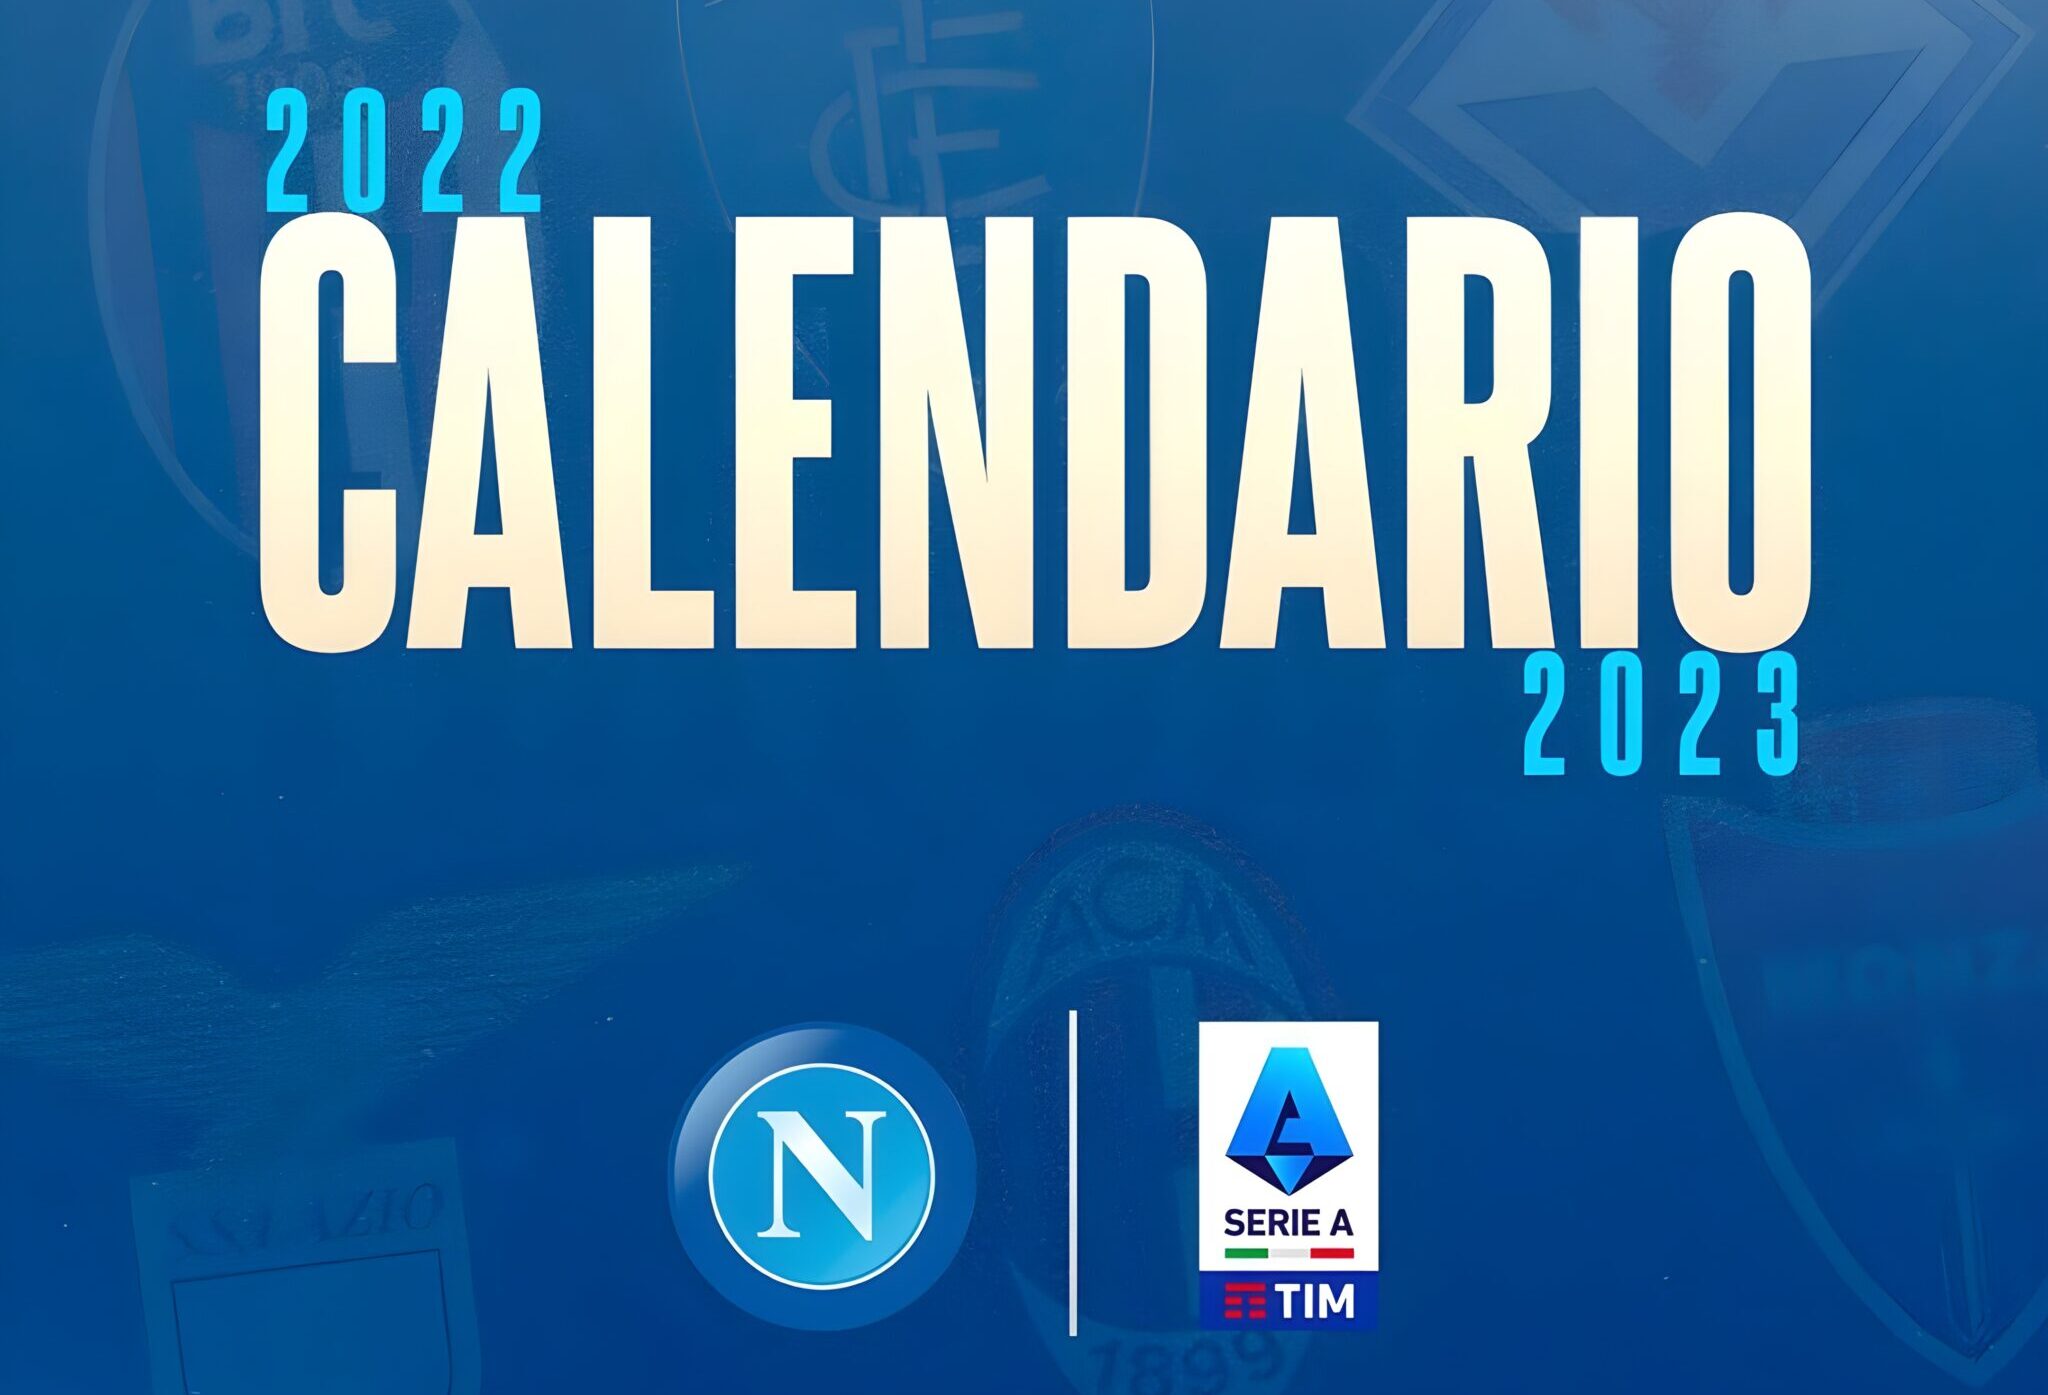 Napoli Serie A 2022 2023 calendar Logo and cover